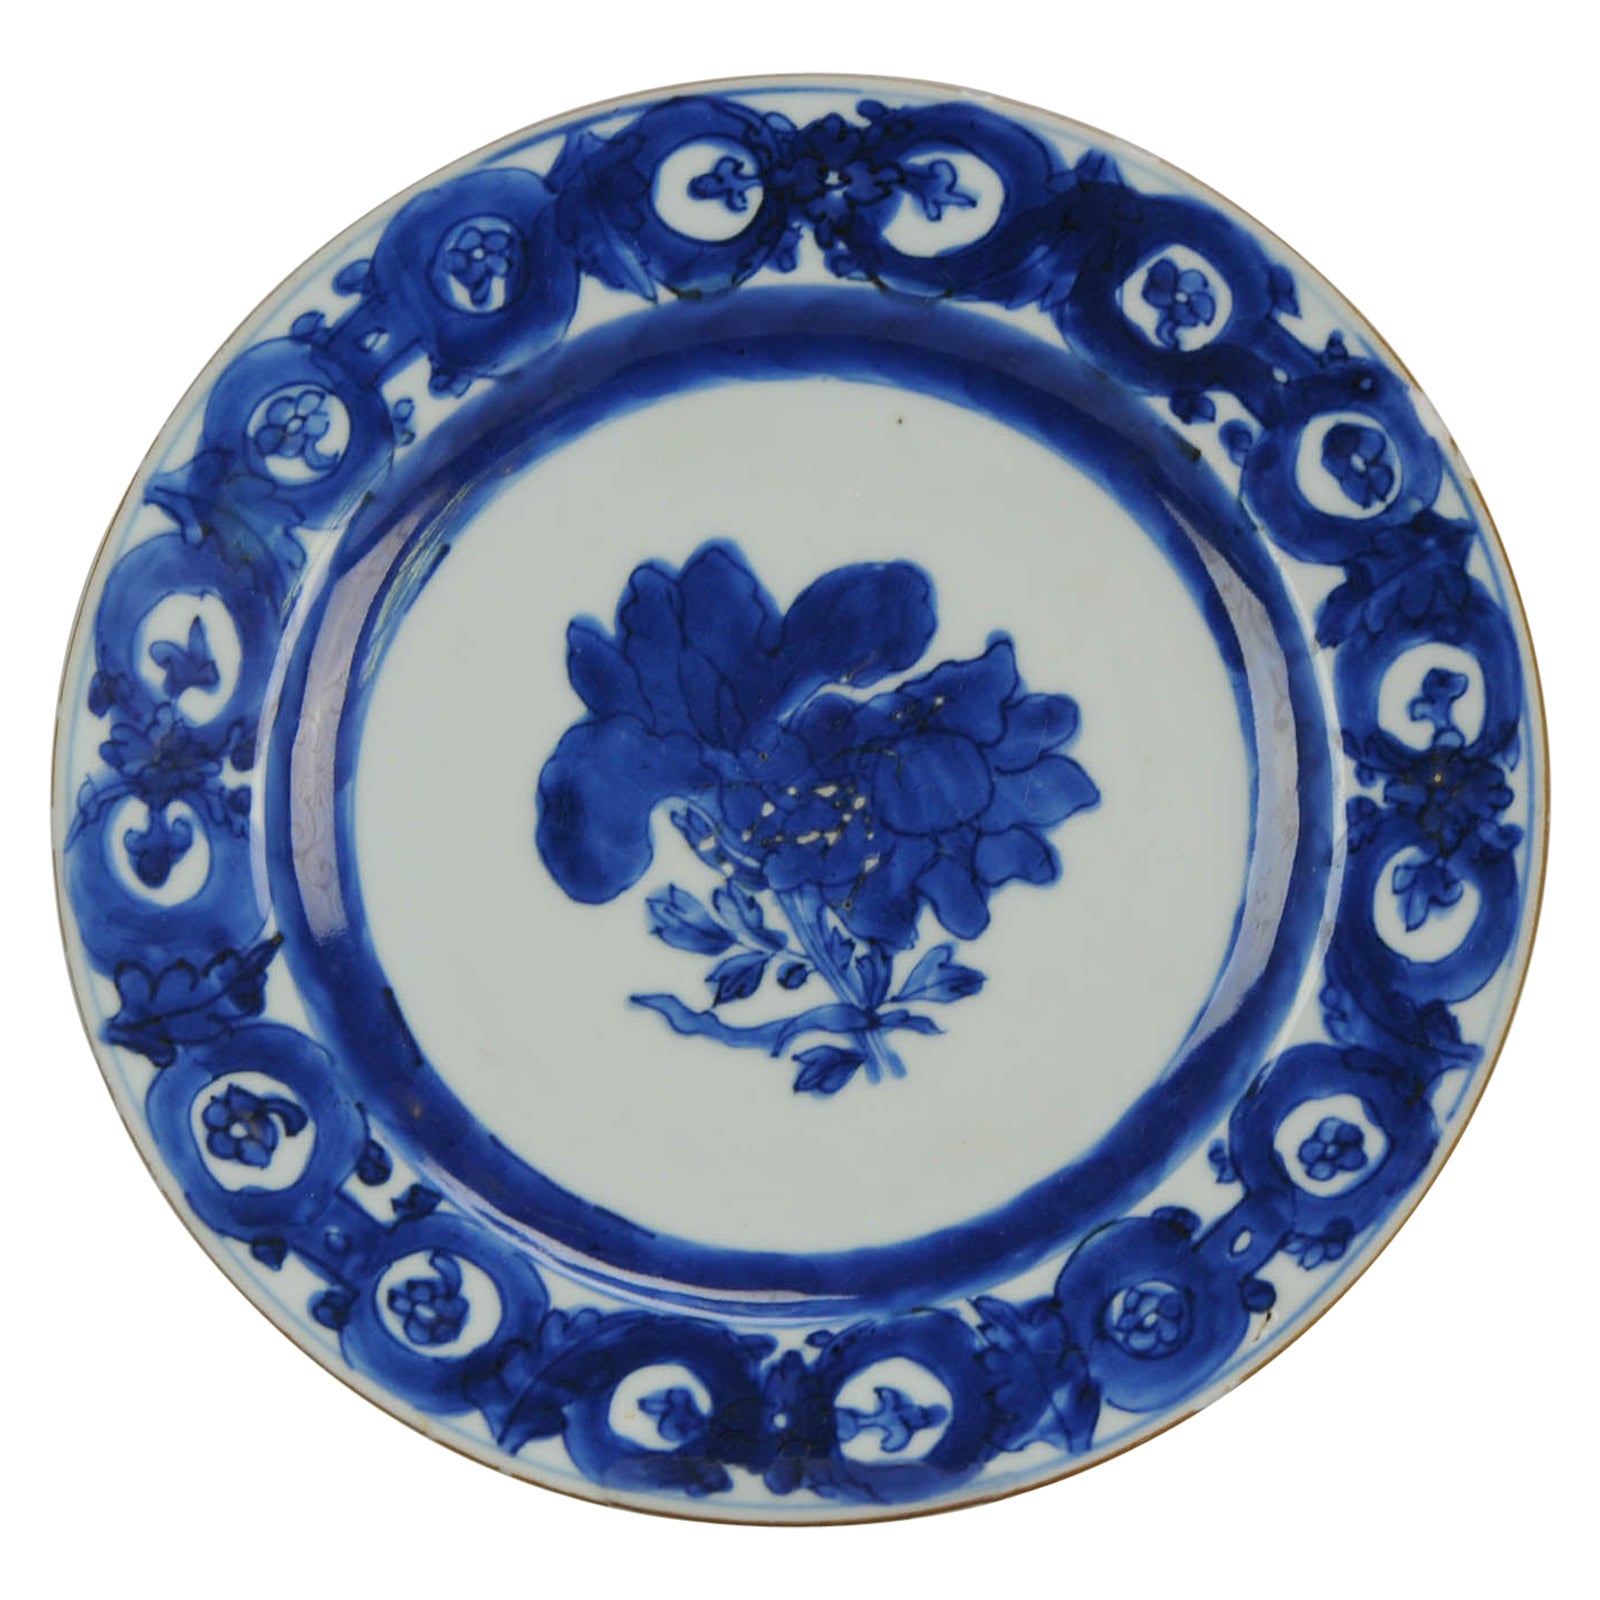 Antique Cobalt Blue Plate Floral Decoration Sybilla Merian Chinese, 18th Century